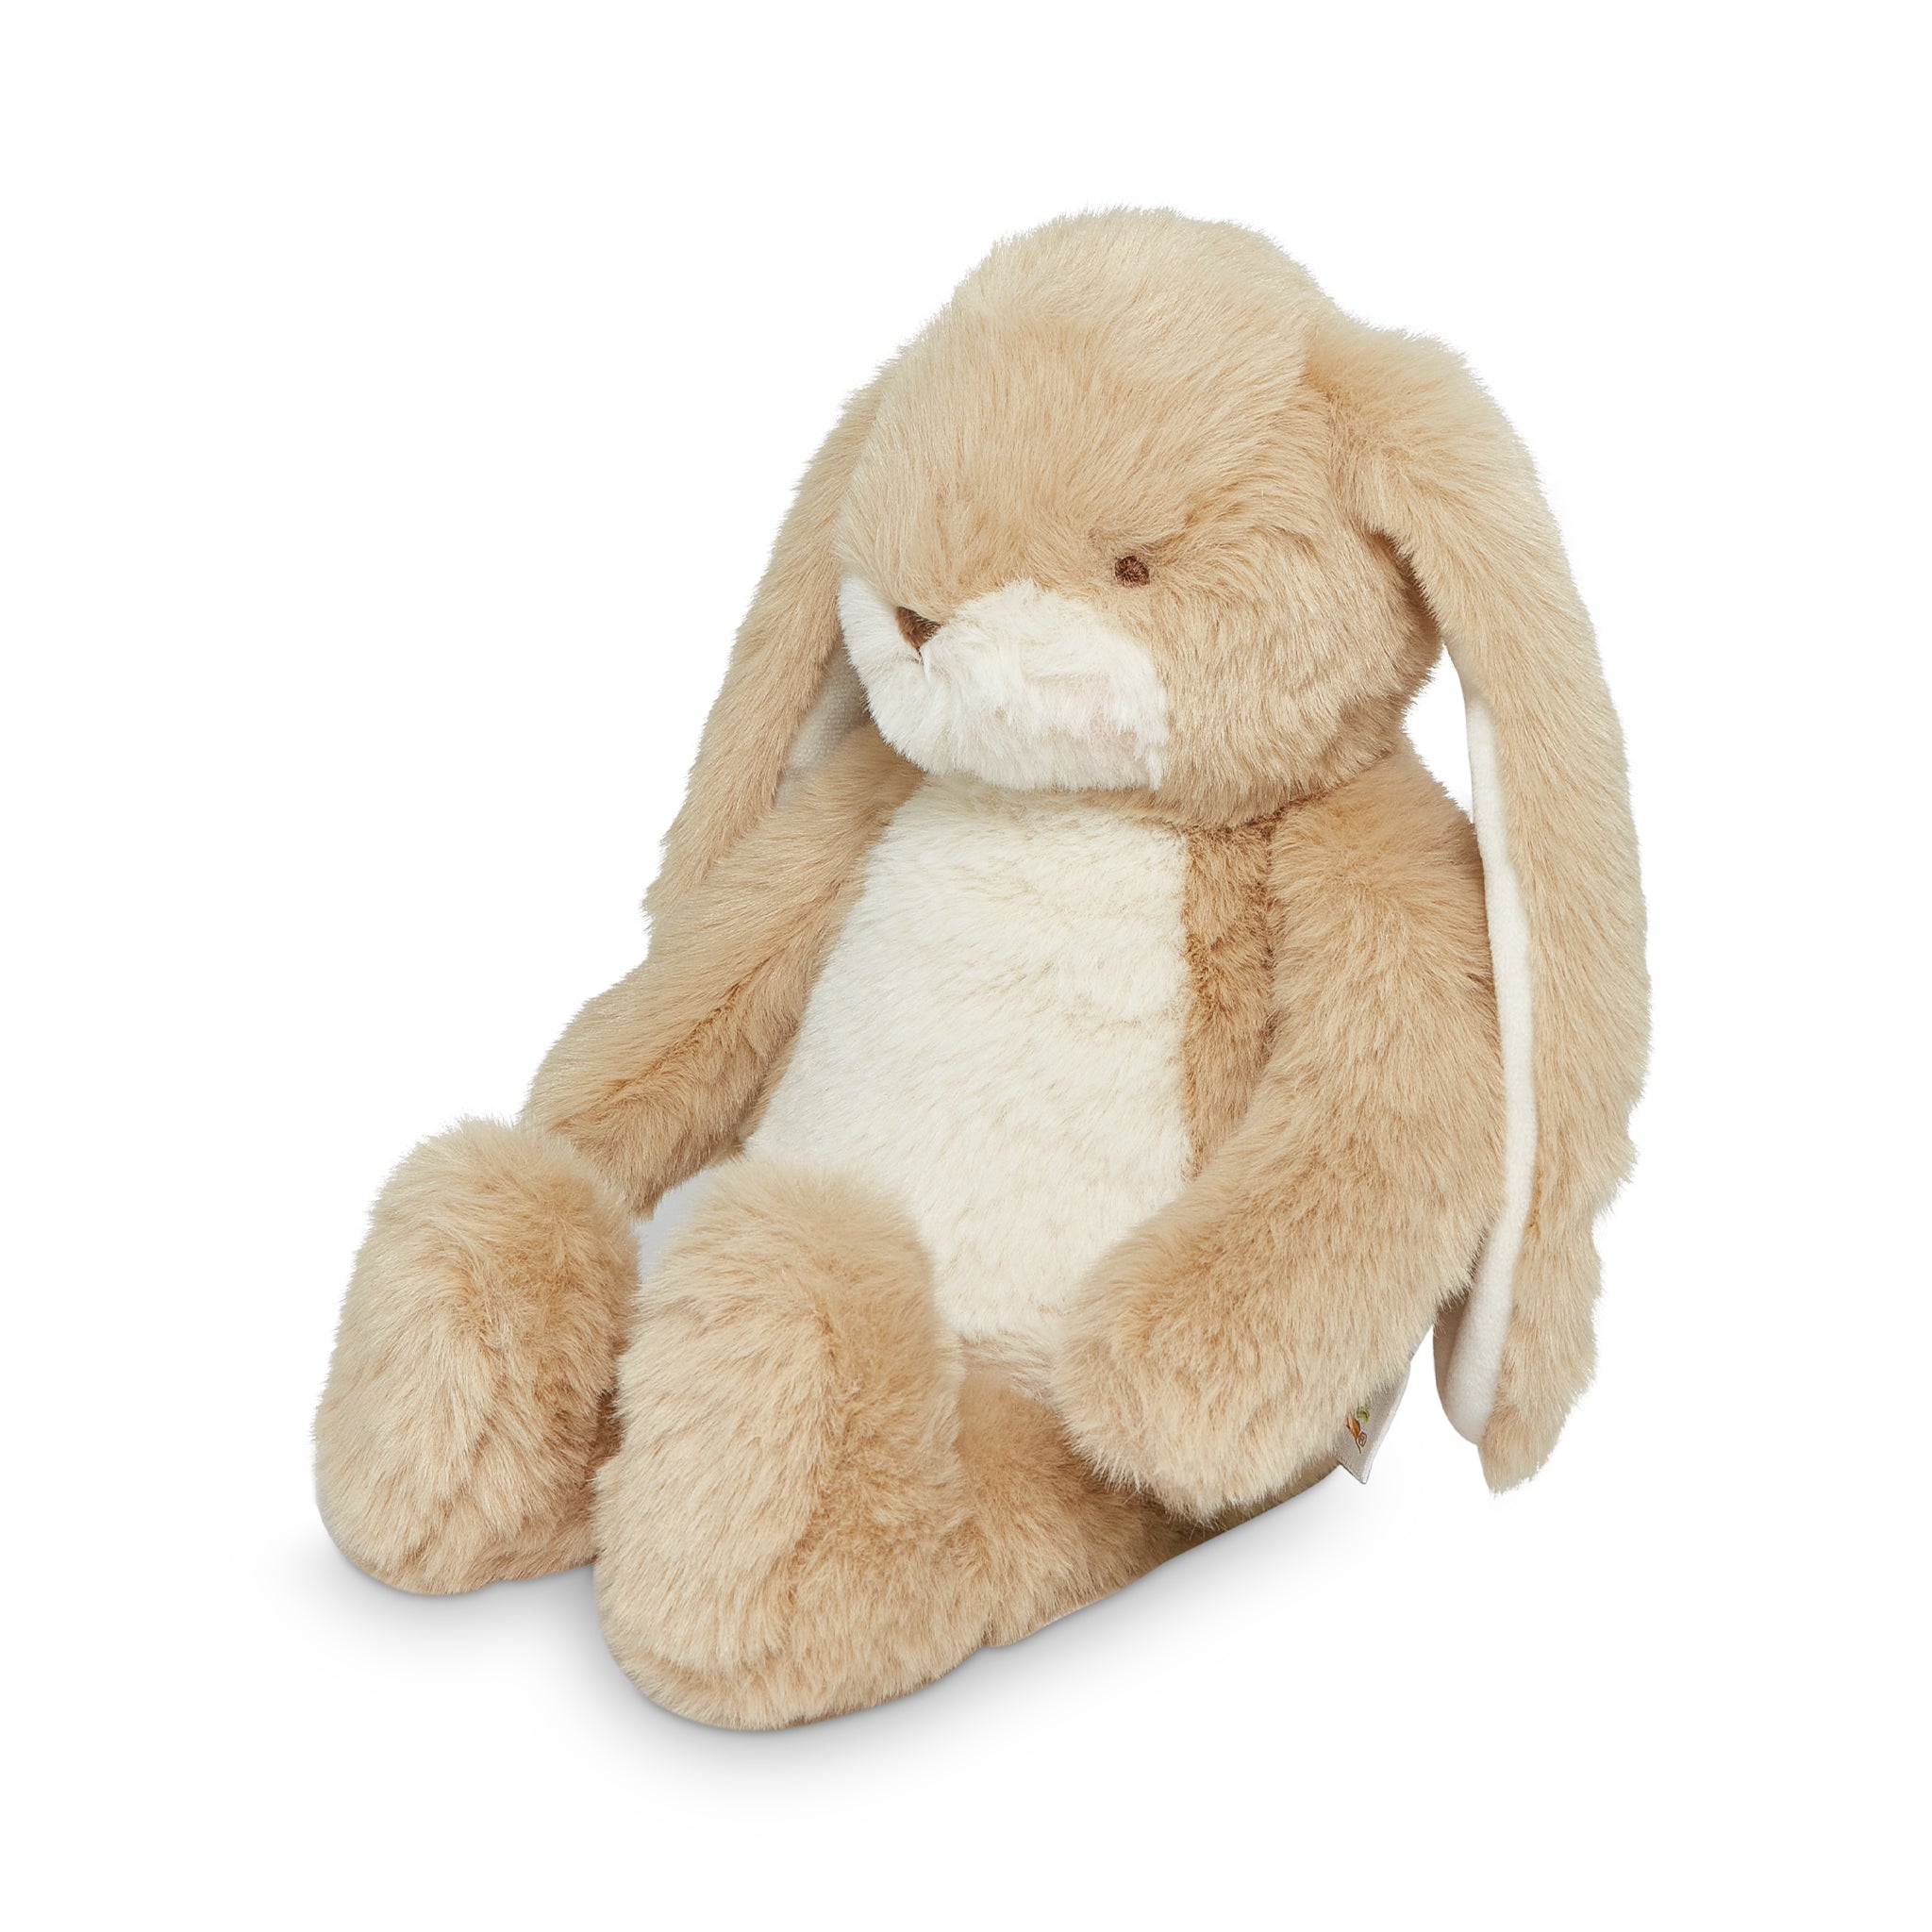 Little Floppy Nibble Bunny - Almond Joy-Fluffle-SKU: 104418 - Bunnies By The Bay